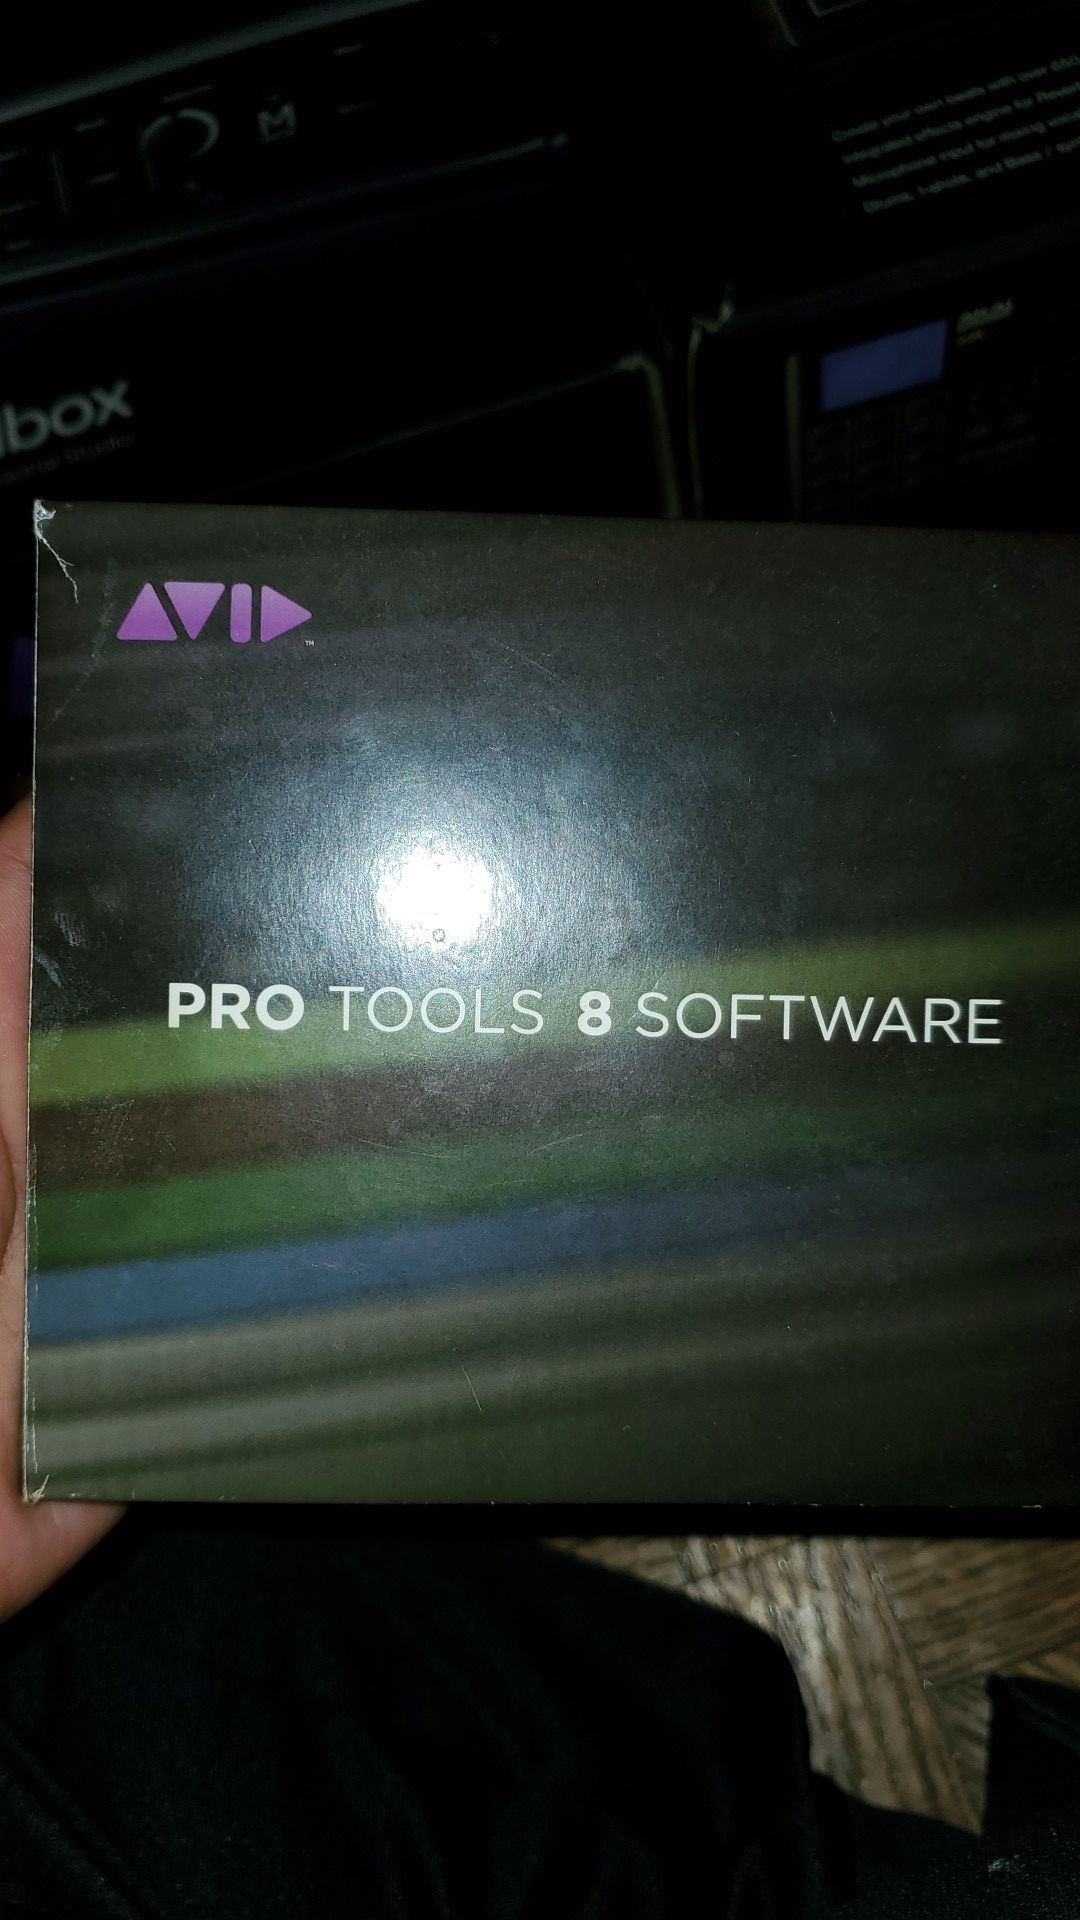 Pro Tools 8 Software